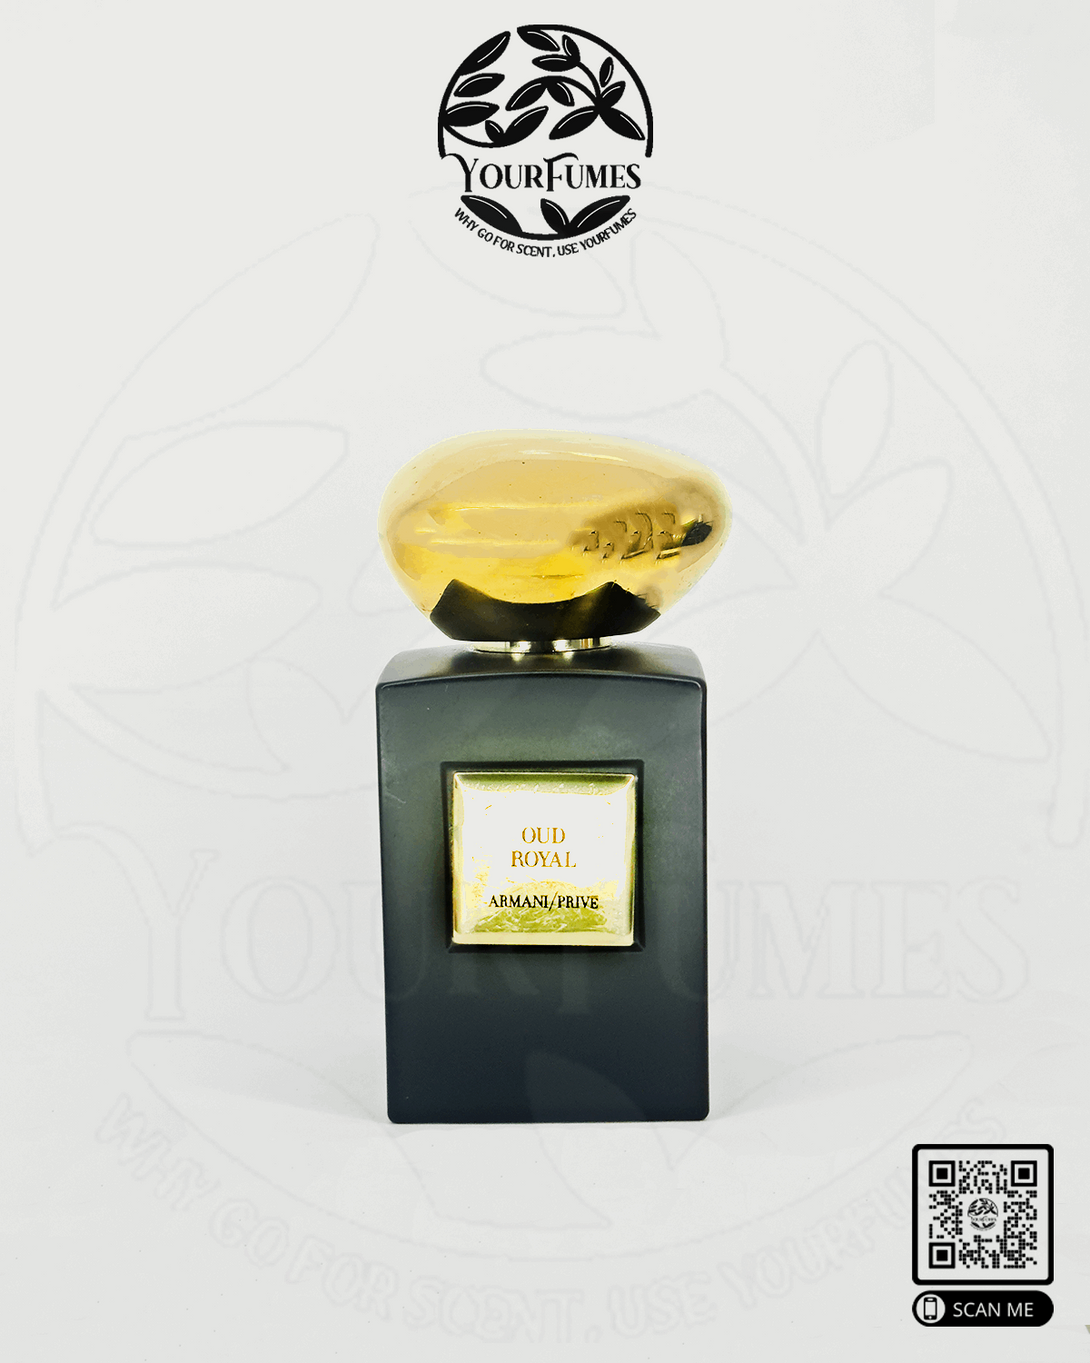 Armani Privé Oud Royal - Yourfumes